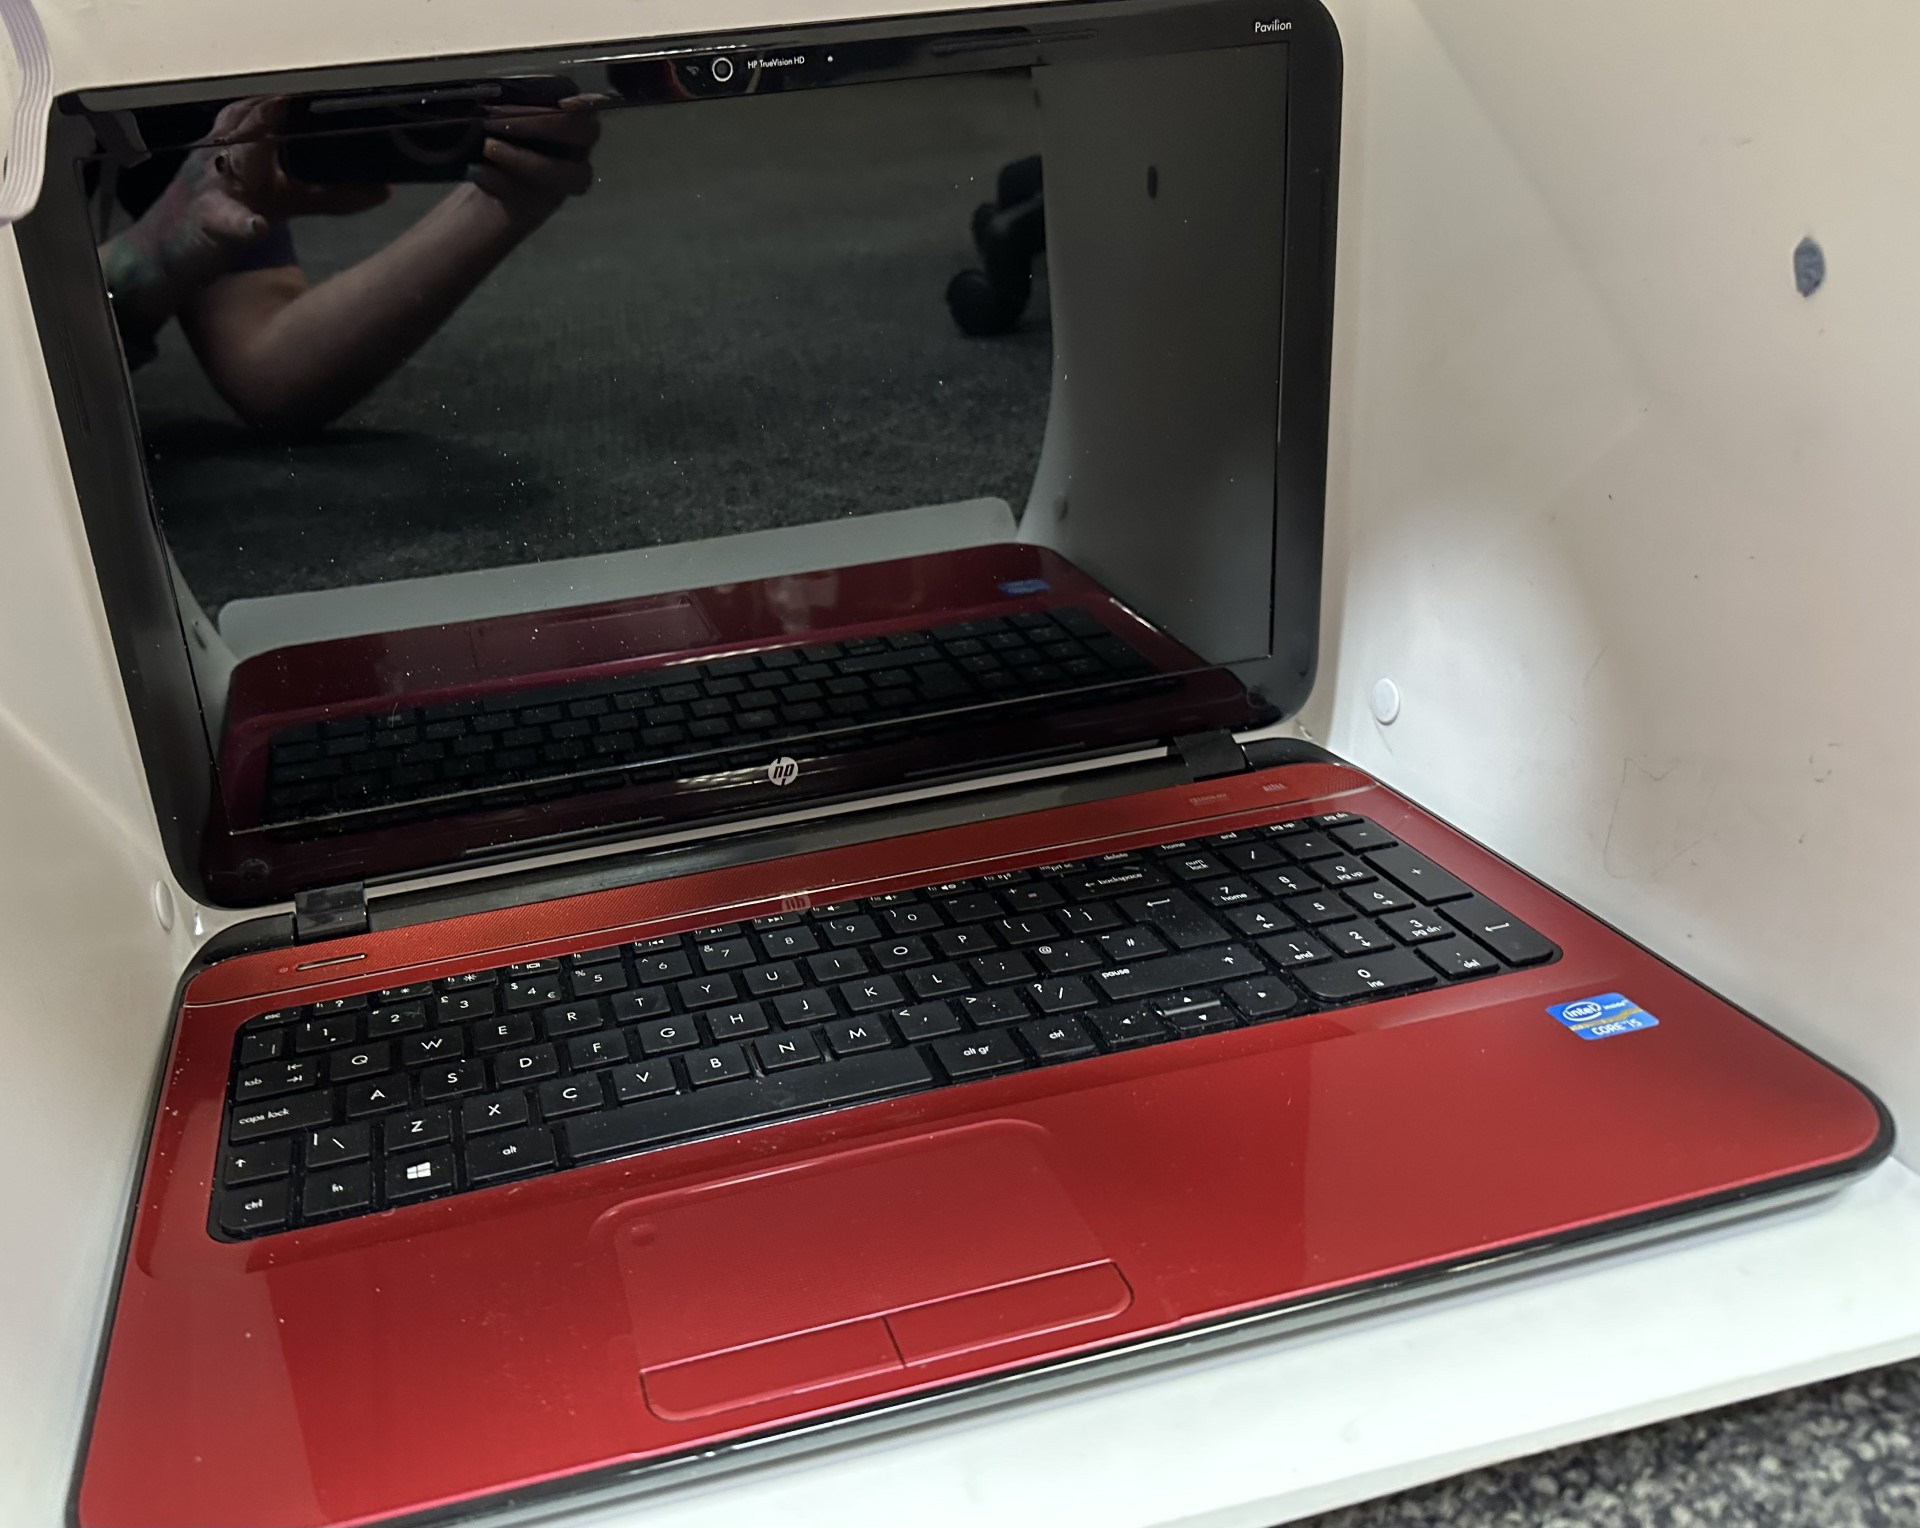 HP Pavillion 4gb Laptop Red 